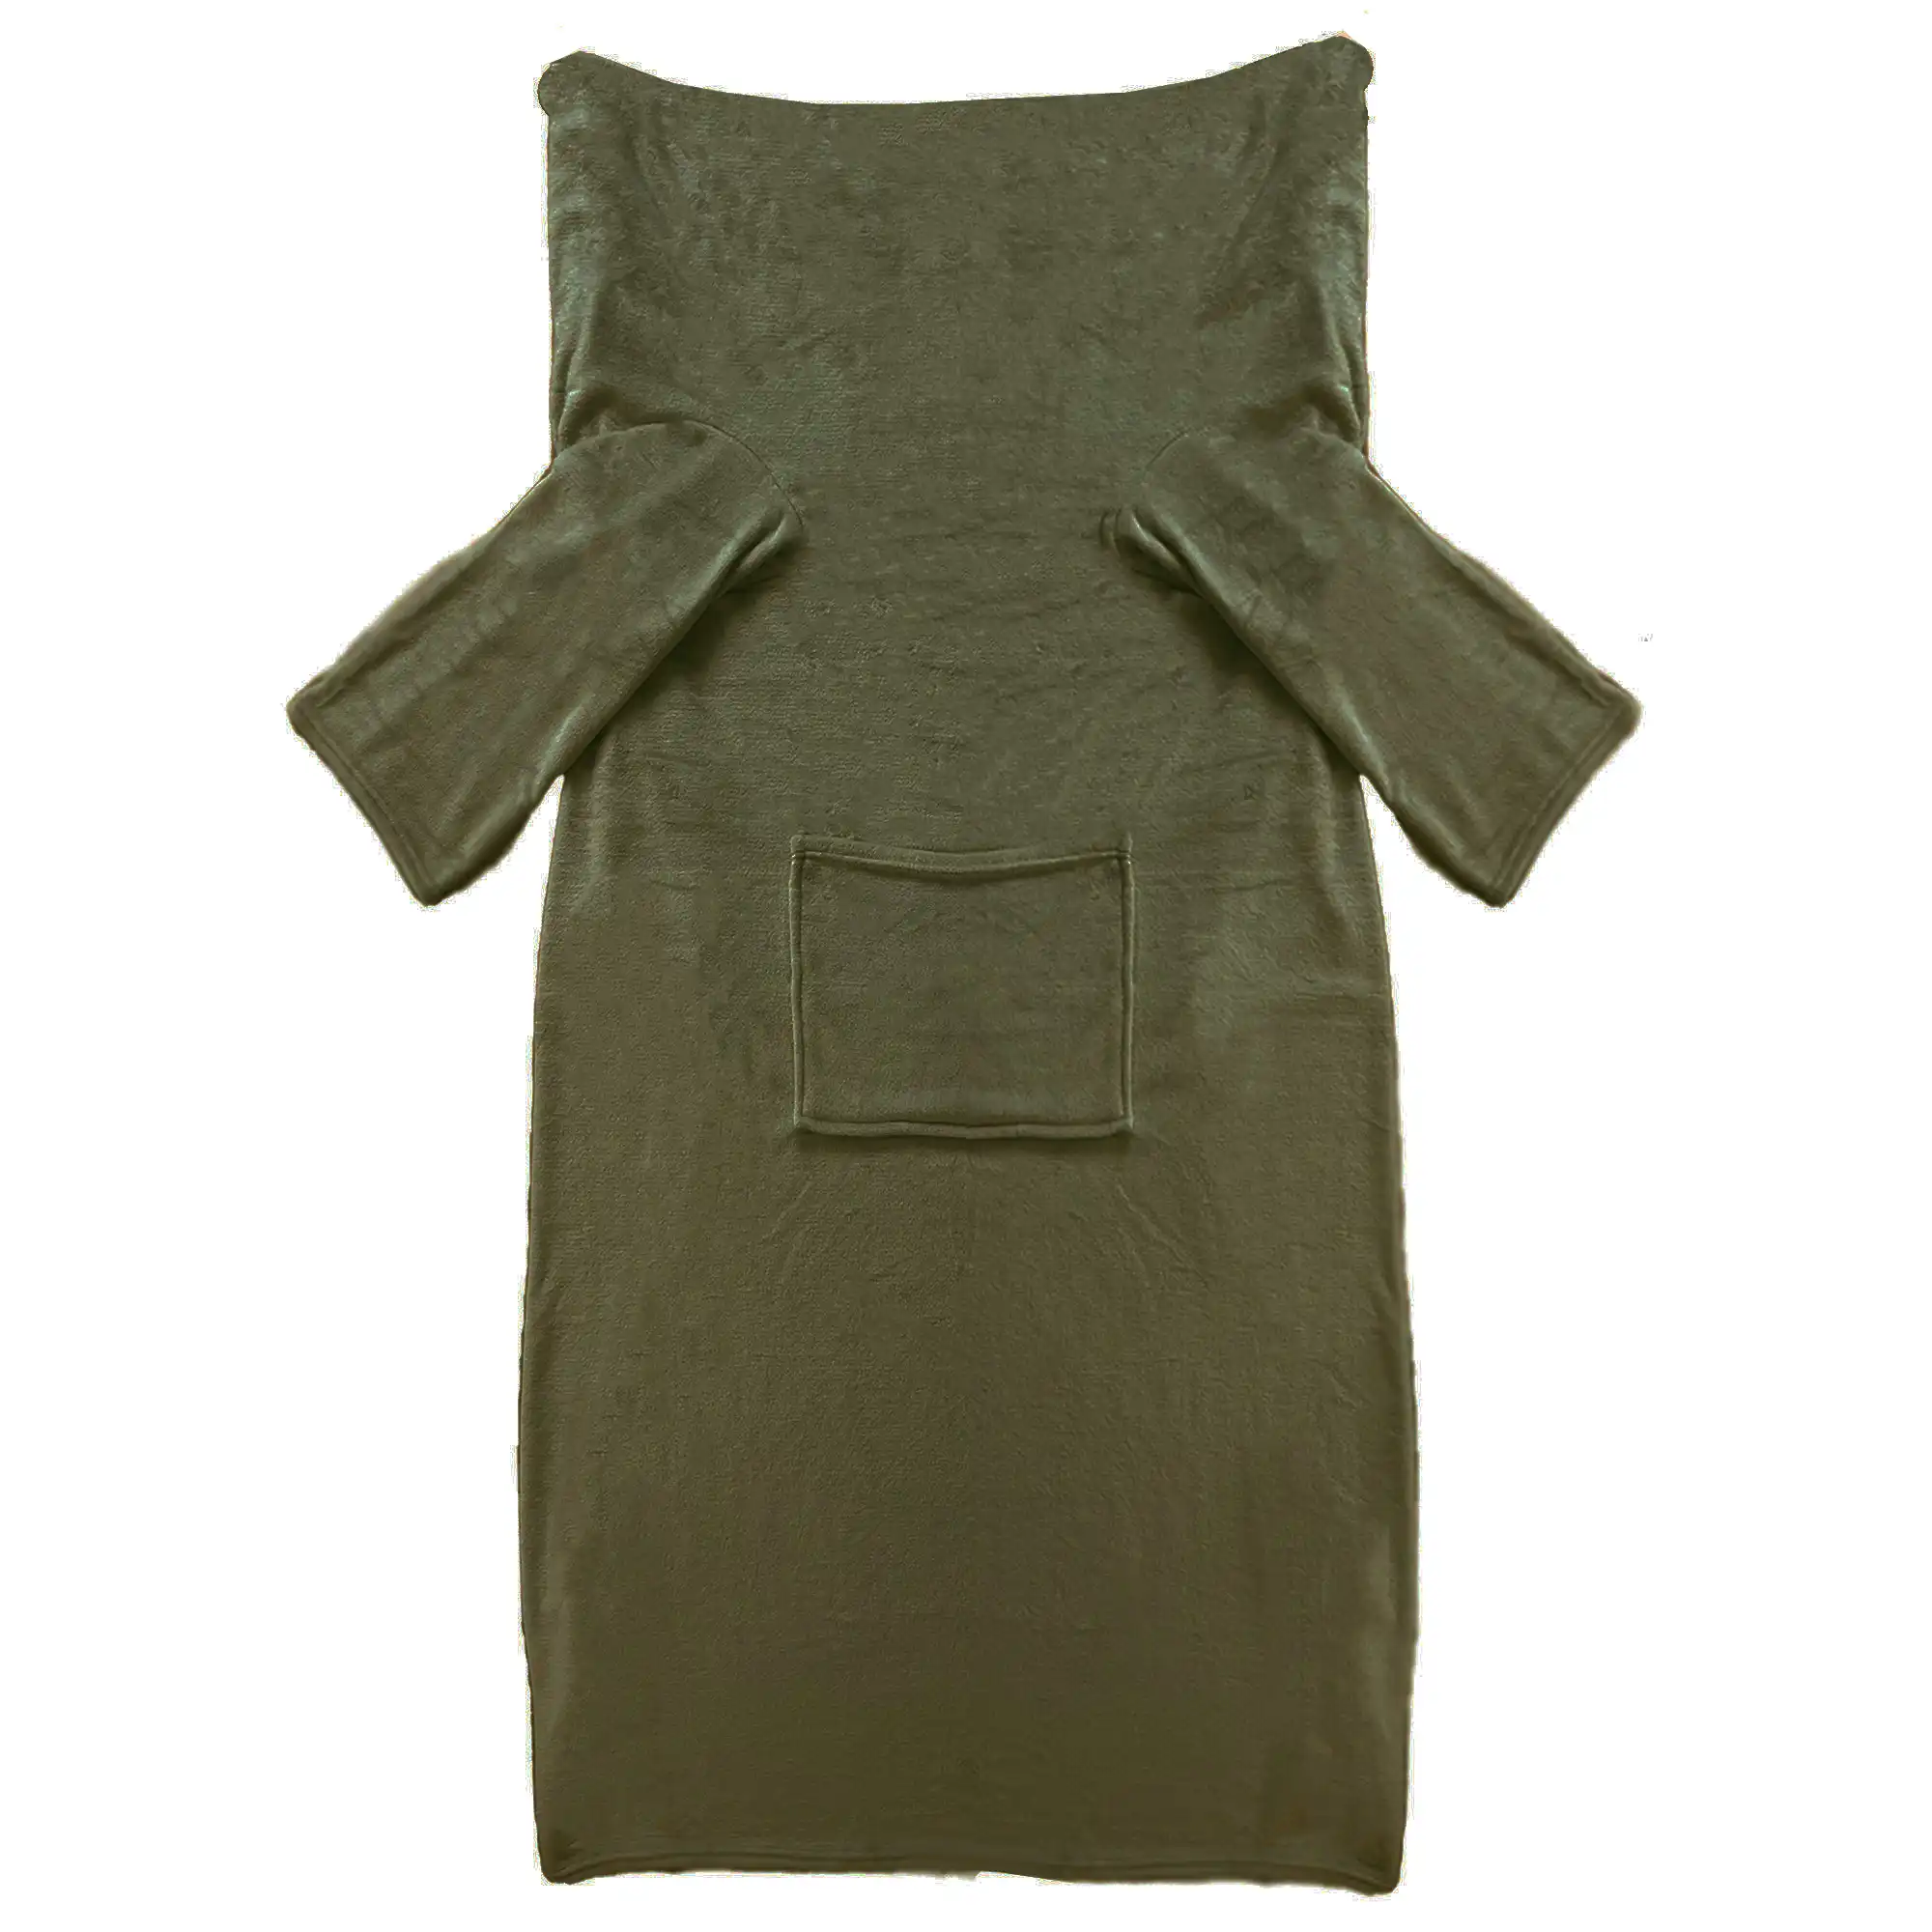 GINY - Plaid met mouwen 150x200 cm - superzacht - flannel fleece - Military Olive - groen